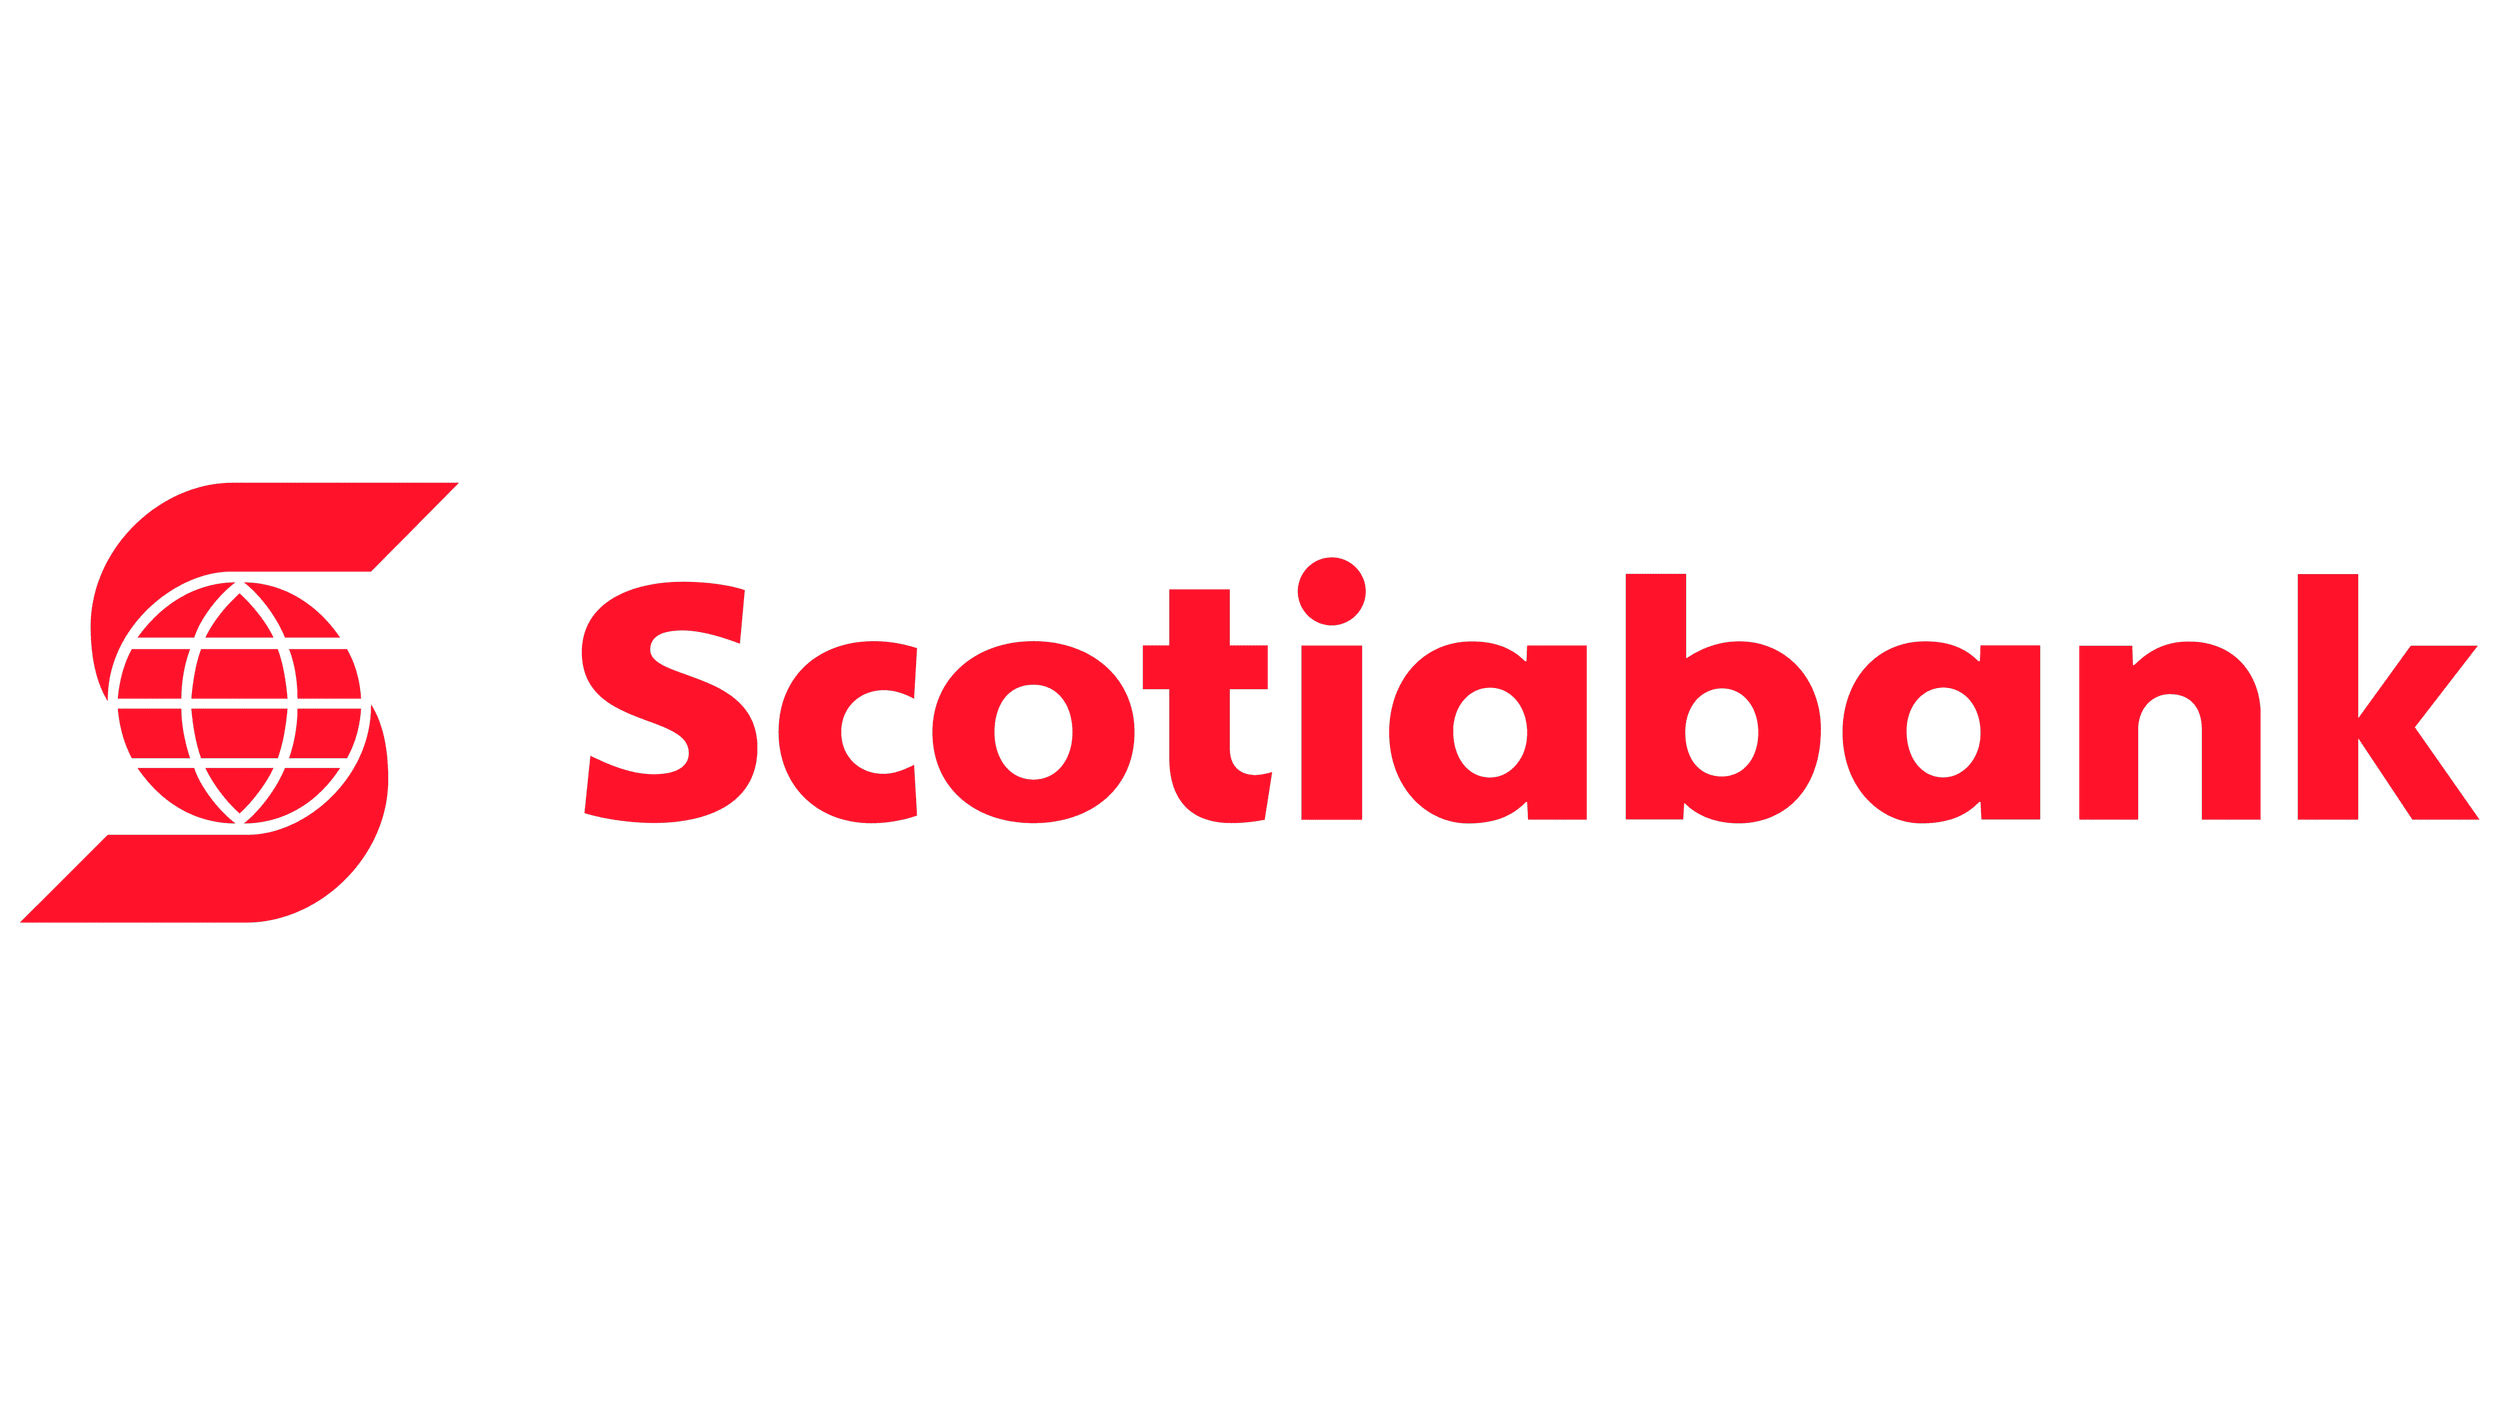 Scotiabank-Logo-1998-2019.png